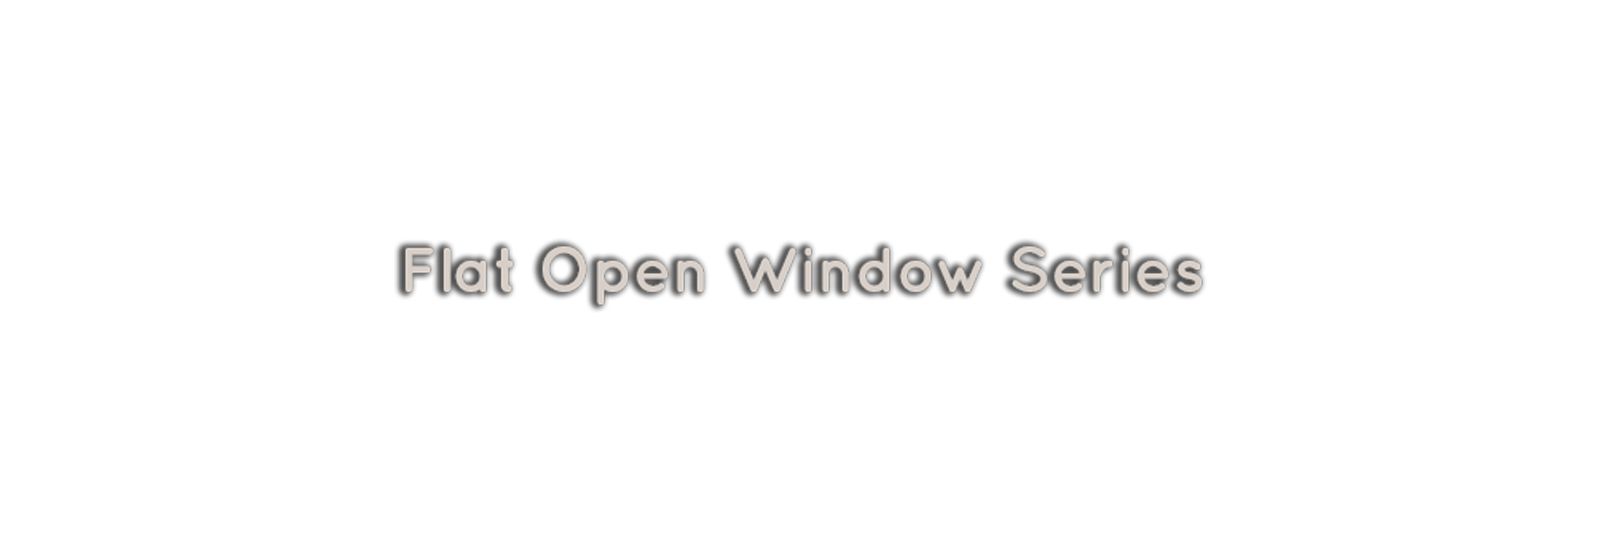 Flat Open Windows Series